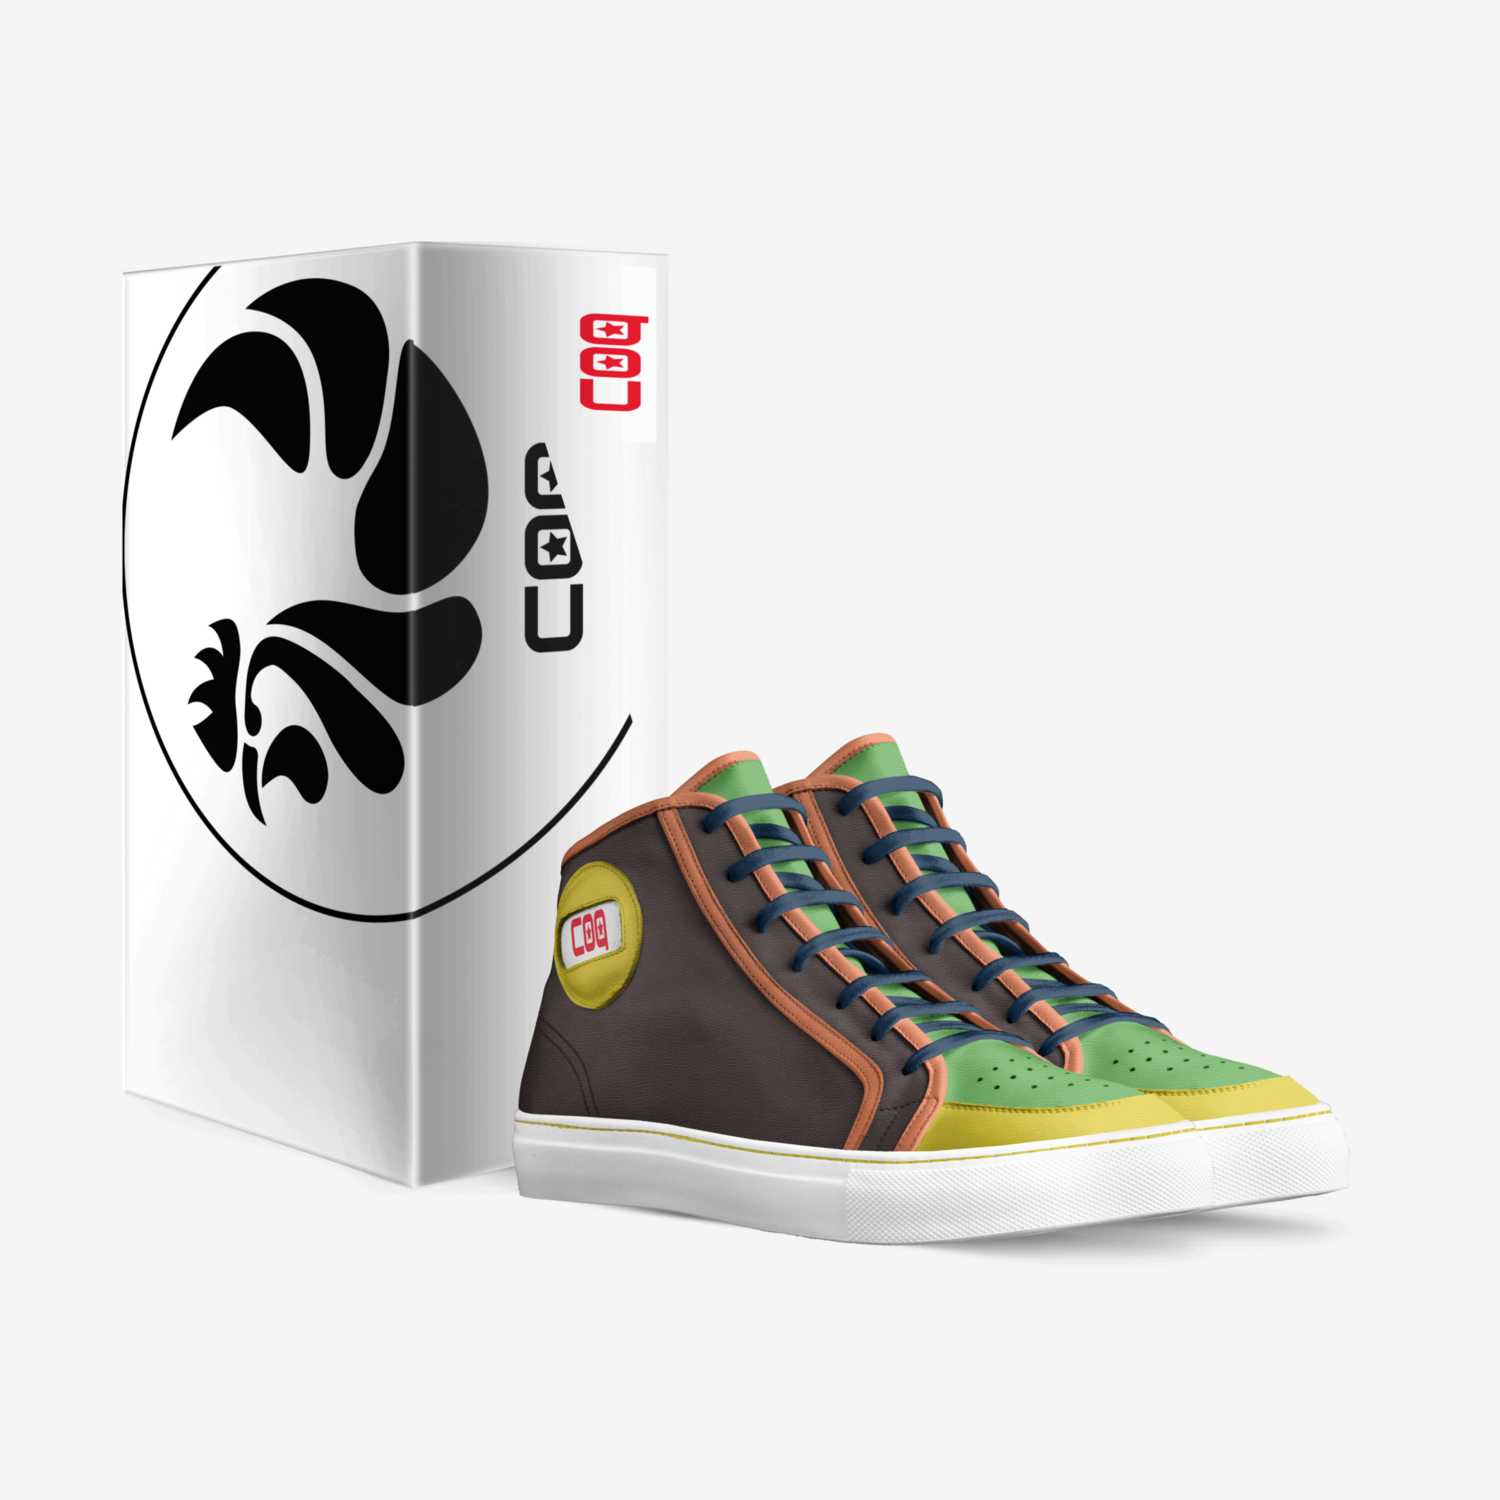 Coq custom made in Italy shoes by Tjaša Budaji | Box view